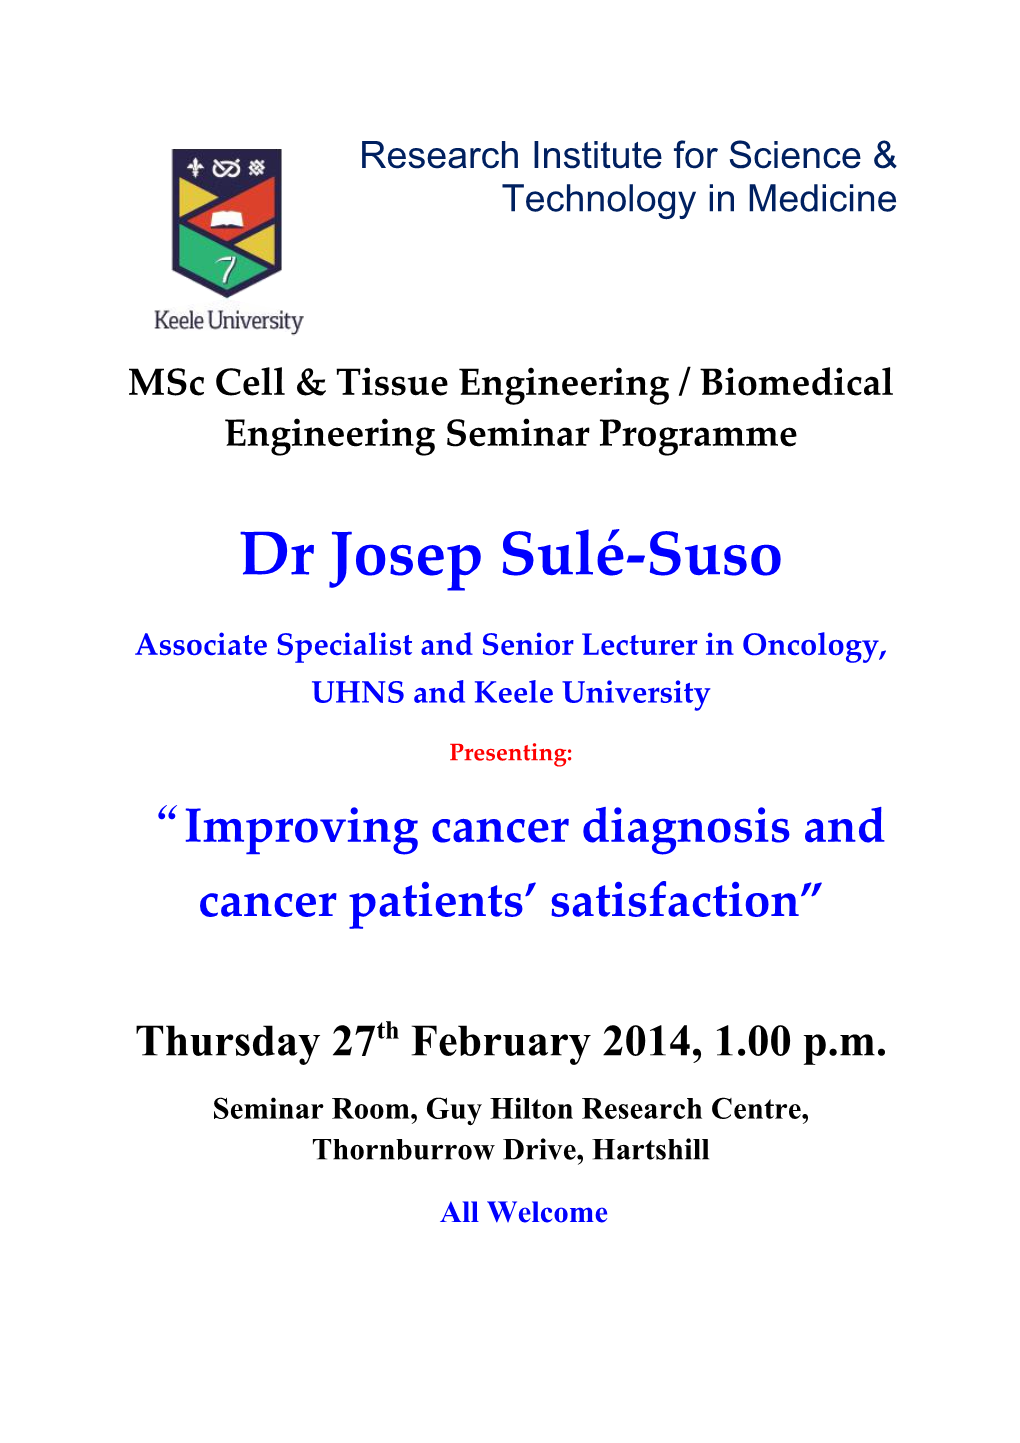 Msc Cell & Tissue Engineering / Biomedical Engineering Seminar Programme